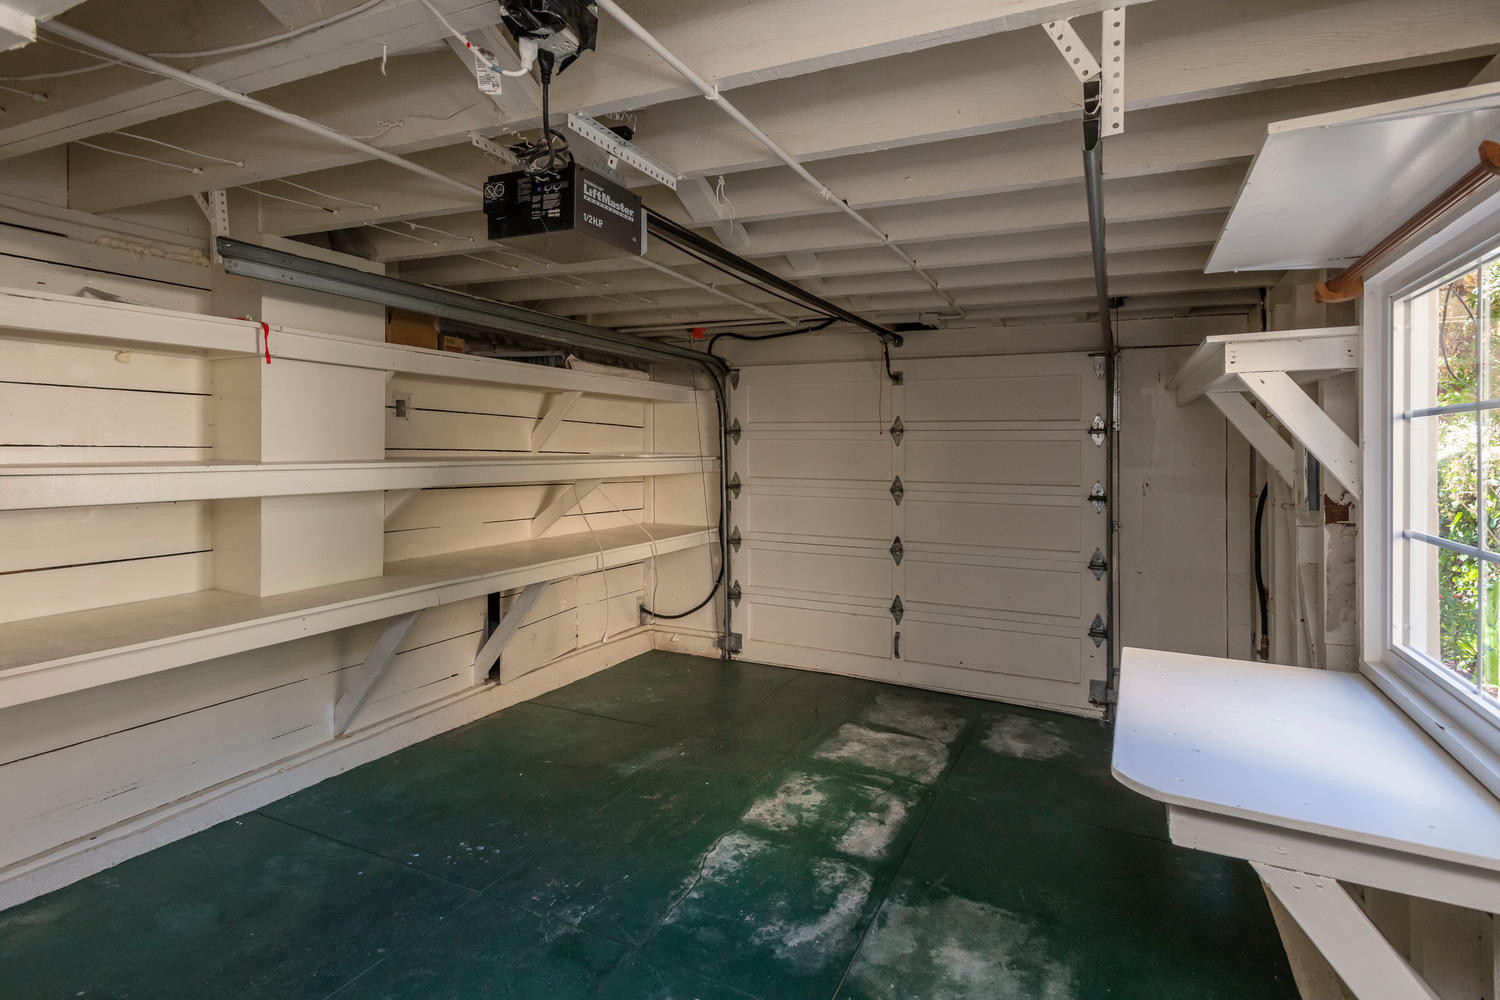 825 Maple Street Garage Built-in Shelves in Aragon Neighborhood in San Mateo.